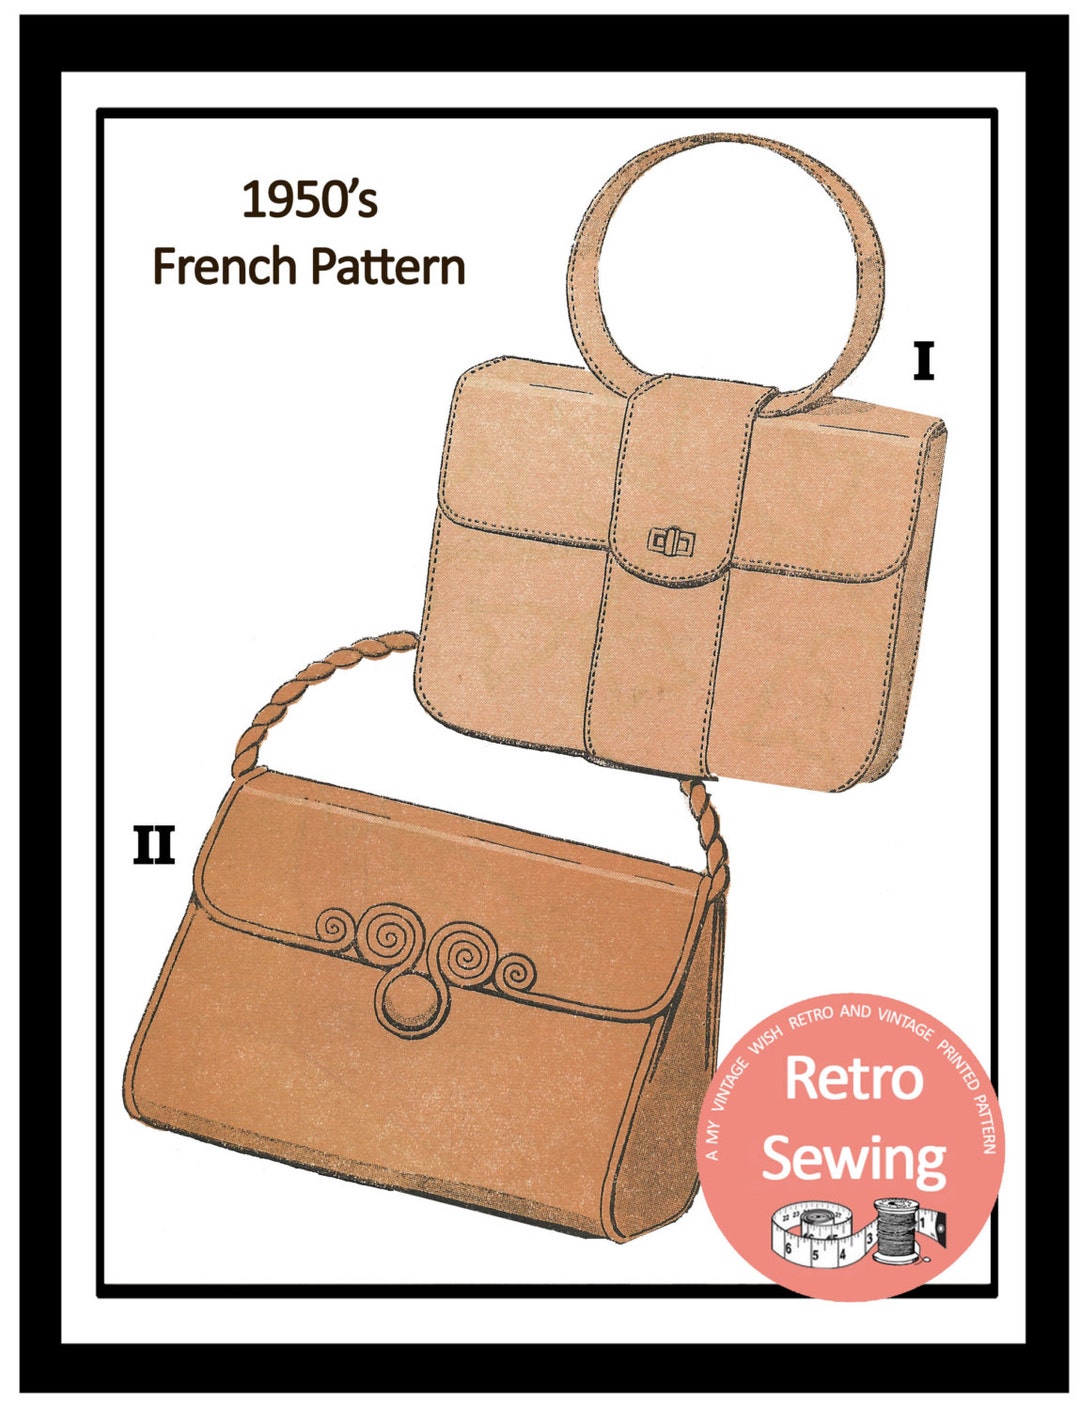 French Handbags